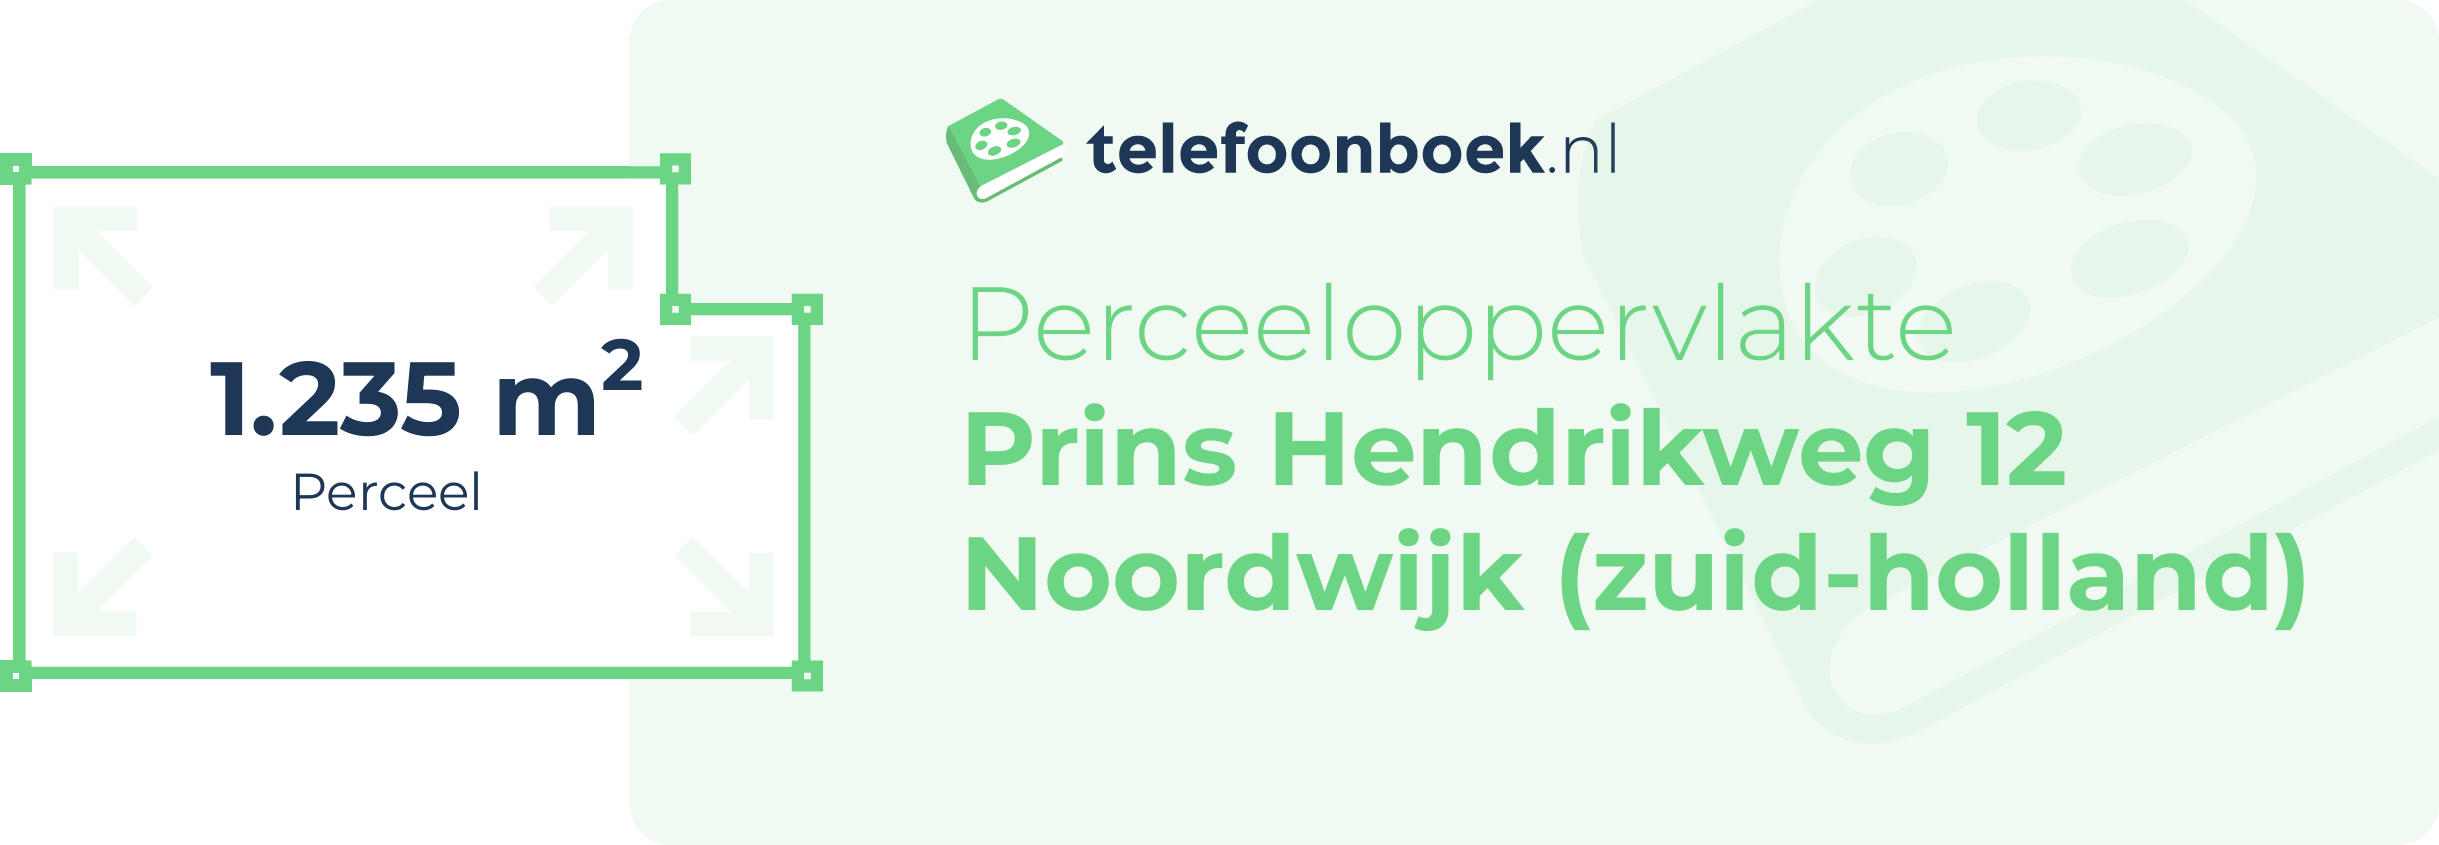 Perceeloppervlakte Prins Hendrikweg 12 Noordwijk (Zuid-Holland)